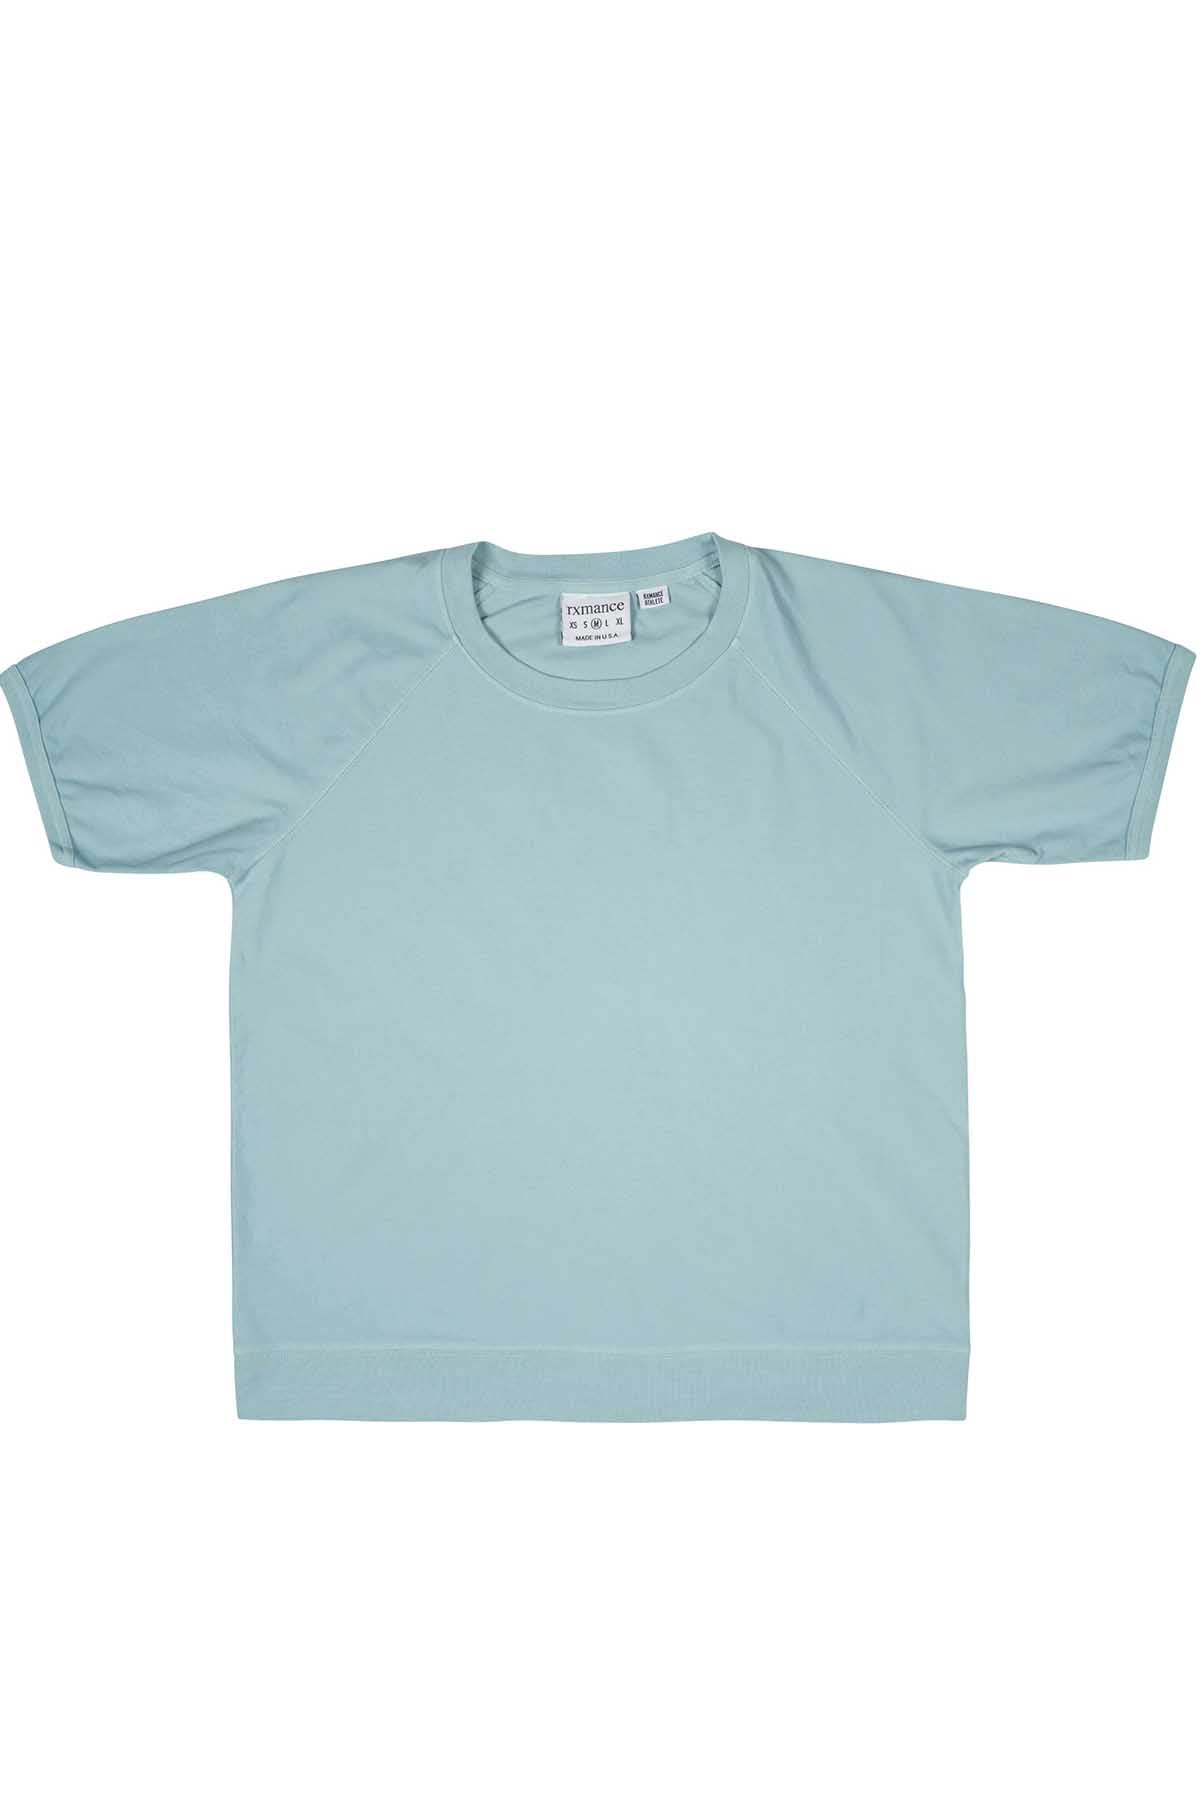 Rxmance Unisex Aqua Blue S/S Sweatshirt